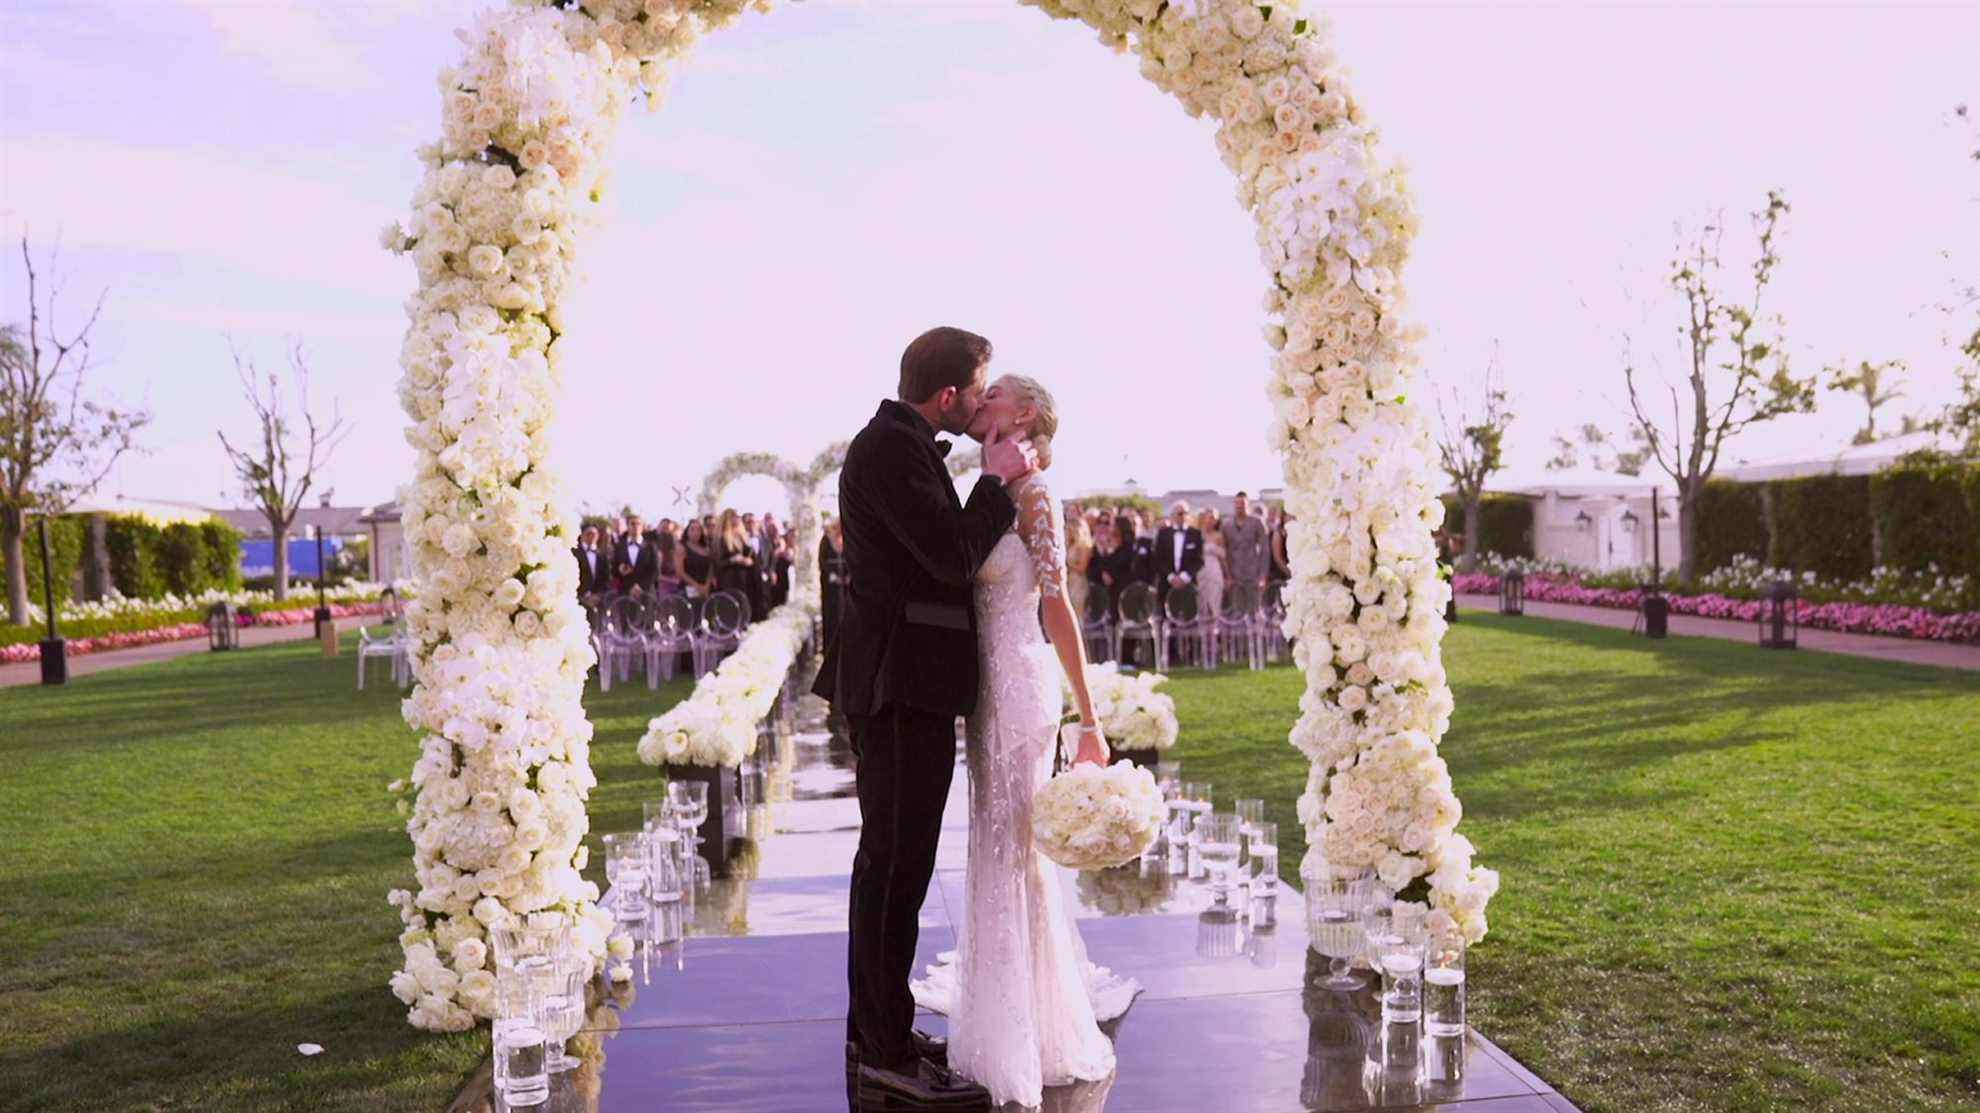 Tarek et Heather se marient dans Selling Sunset saison 5